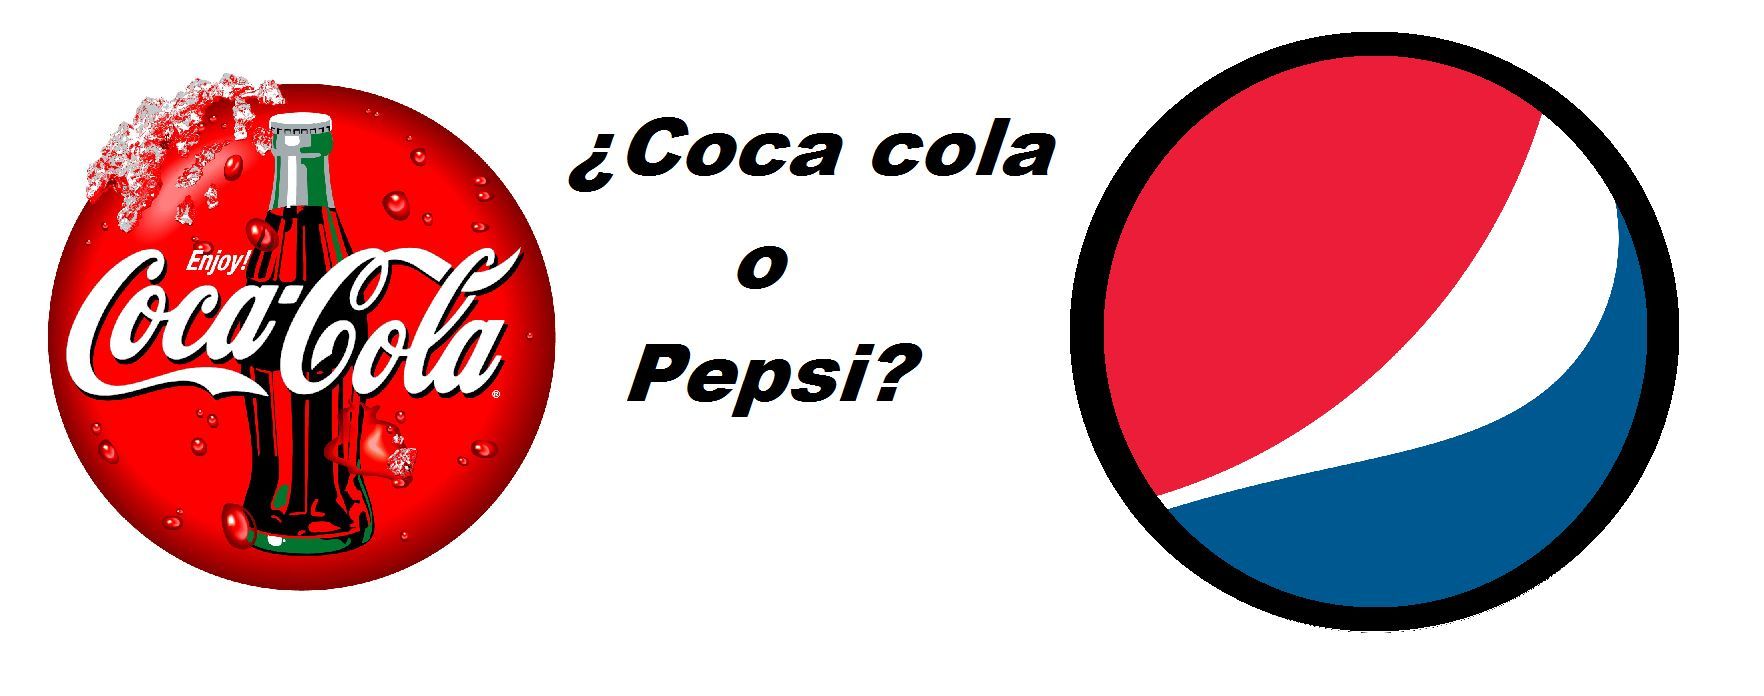 Prefieres, ¿Coca cola o Pepsi?